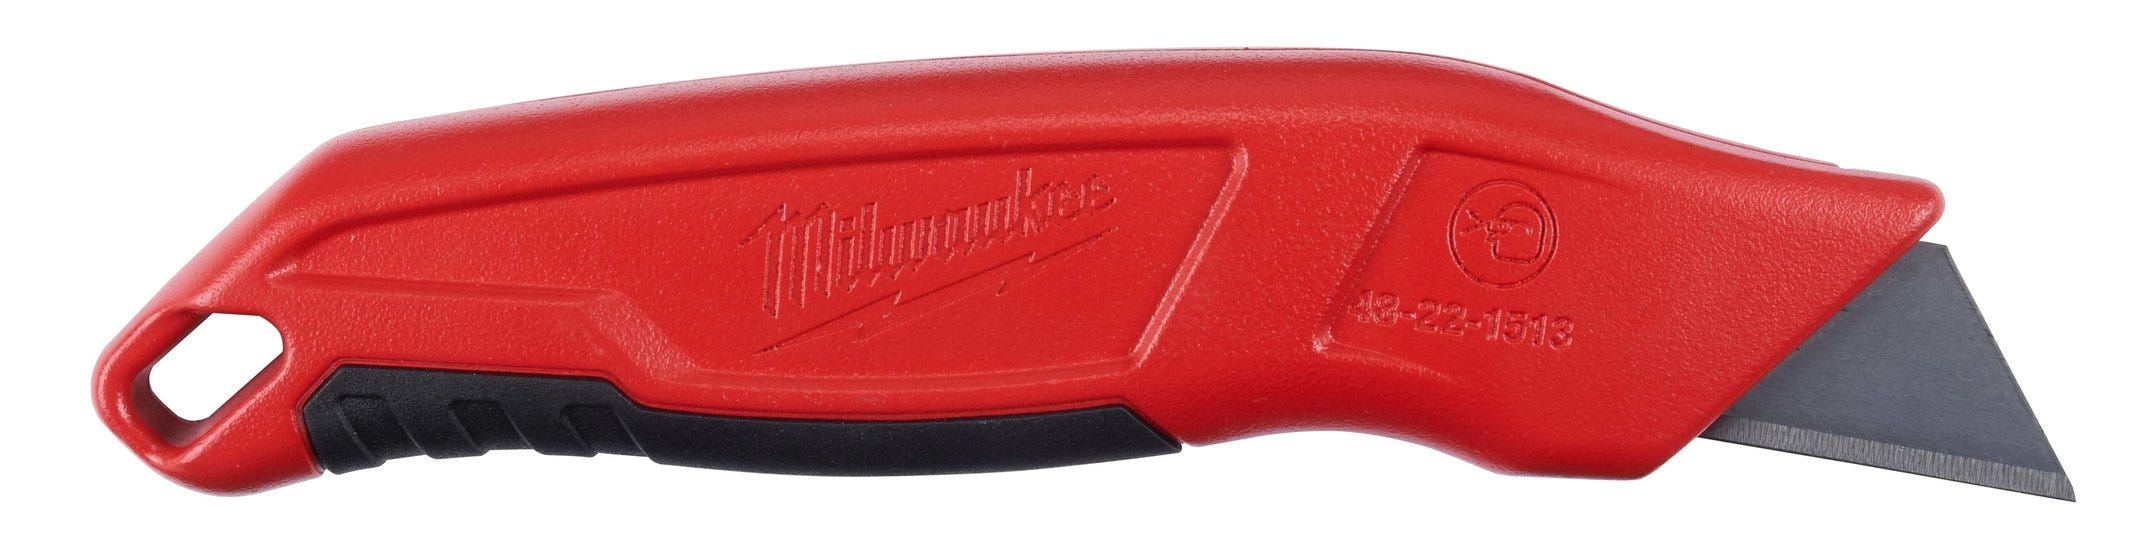 milwaukee-48-22-1513-fixed-blade-utility-knife-1